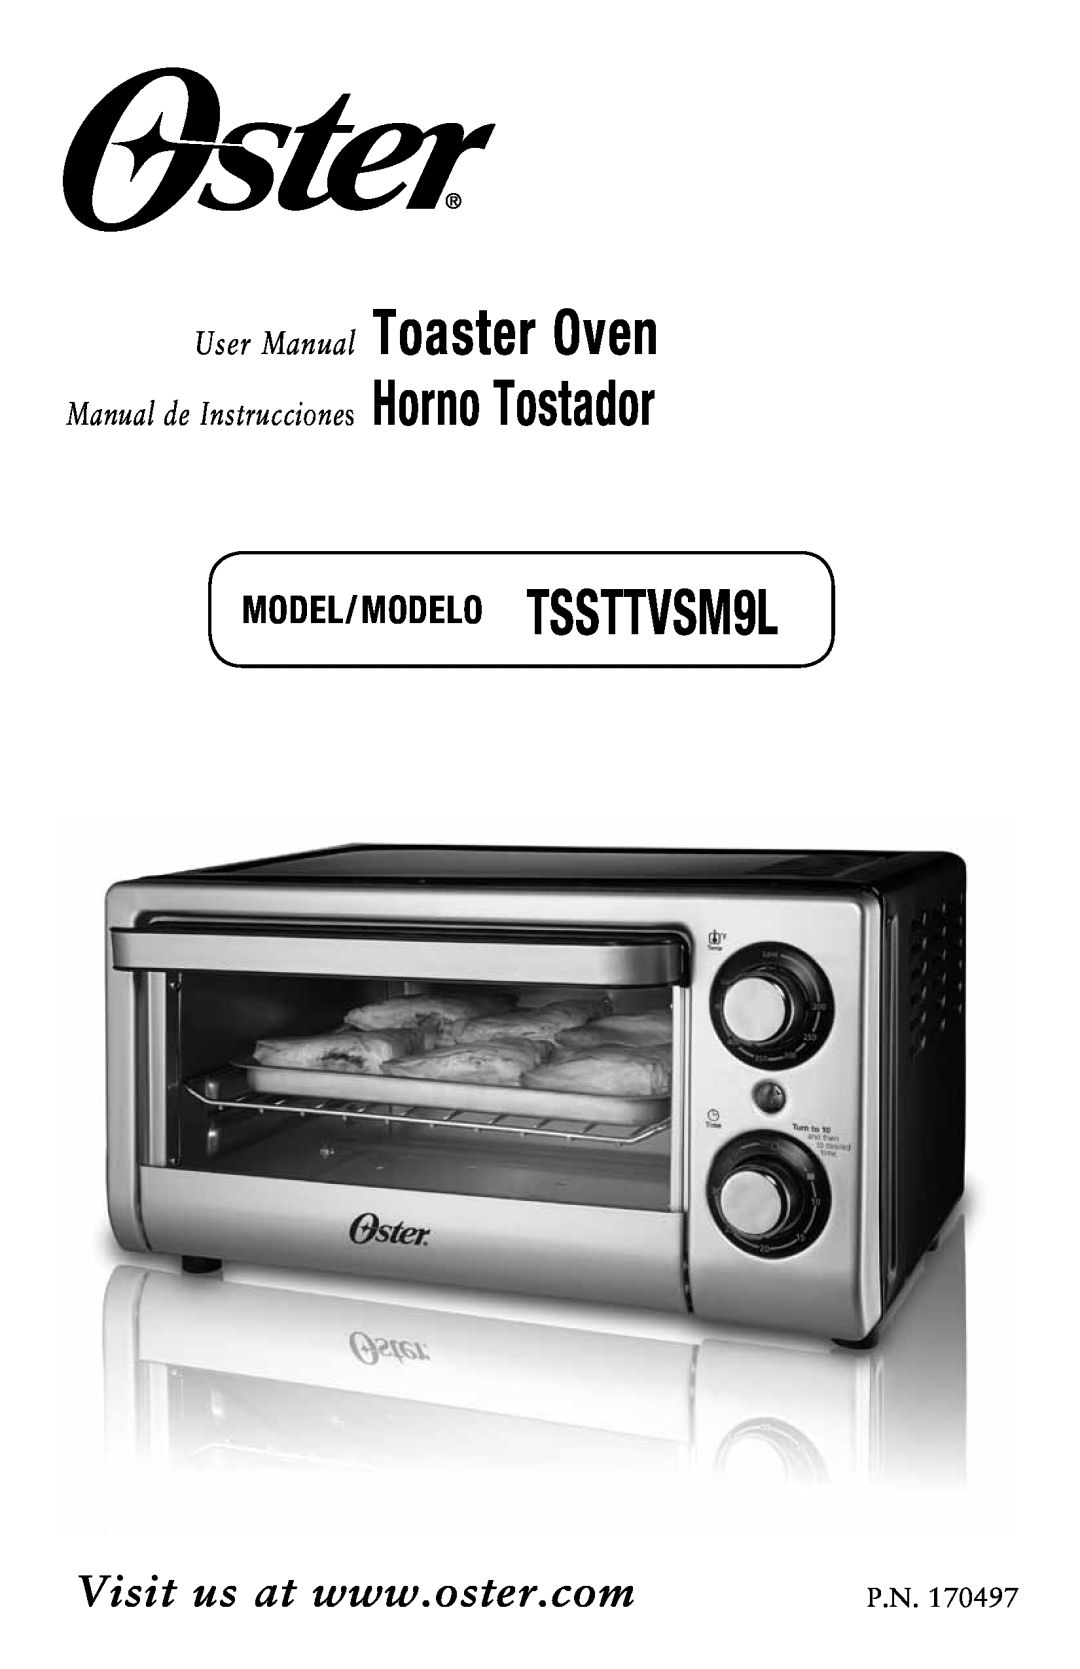 Oster user manual MODEL/ MODELO TSSTTVSM9L, P.N, Toaster Oven Horno Tostador, Manual de Instrucciones 